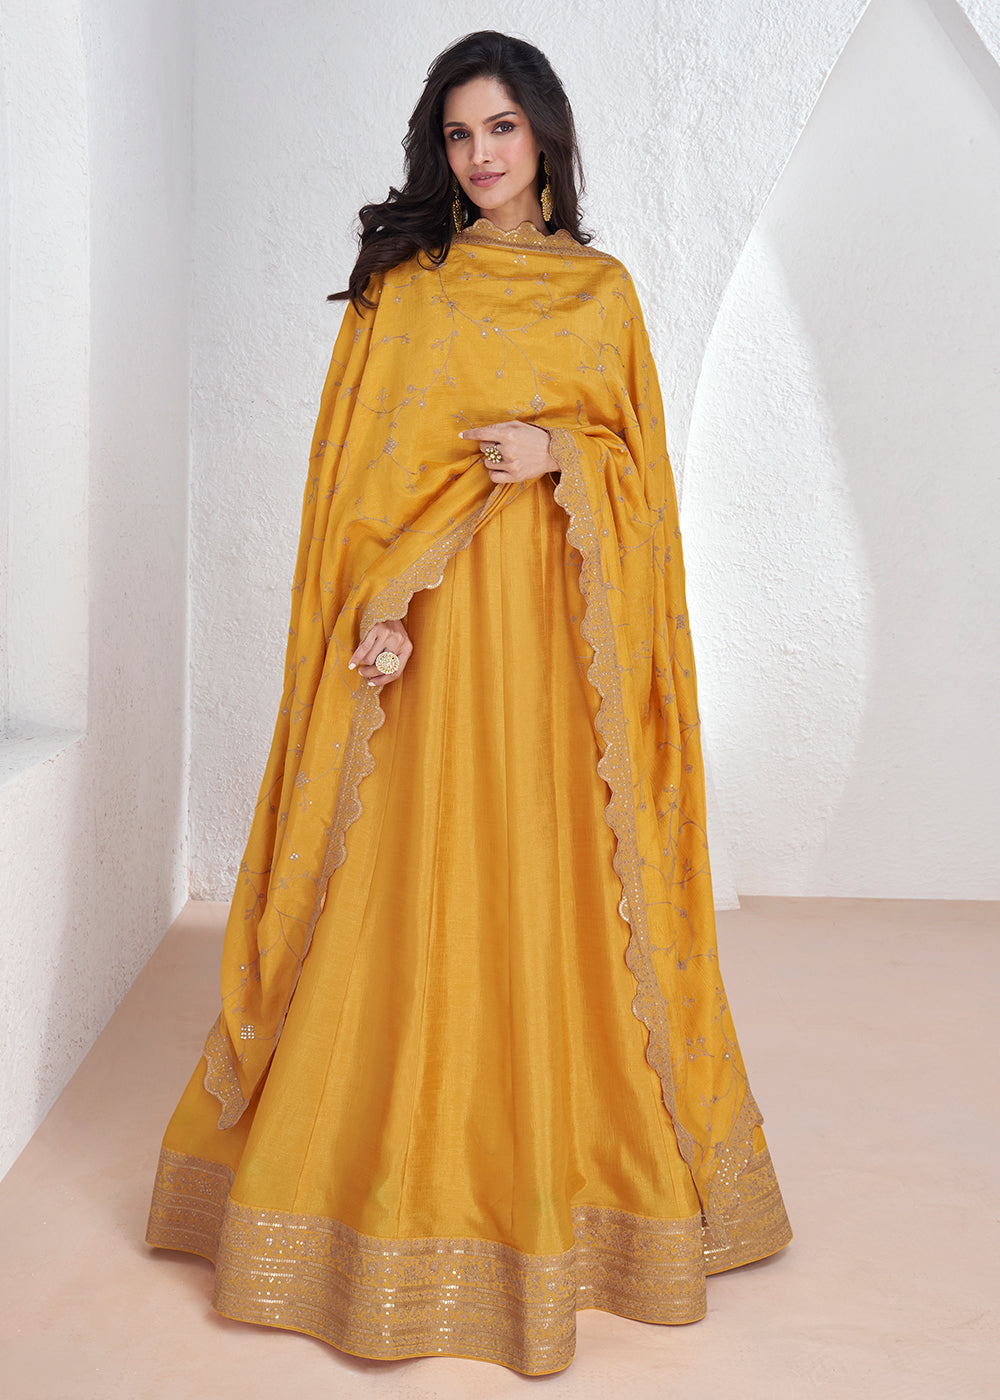 Buy Now Elegant Yellow Embroidered Silk Wedding Anarkali Dress Online in USA, UK, Australia, New Zealand, Canada & Worldwide at Empress Clothing.